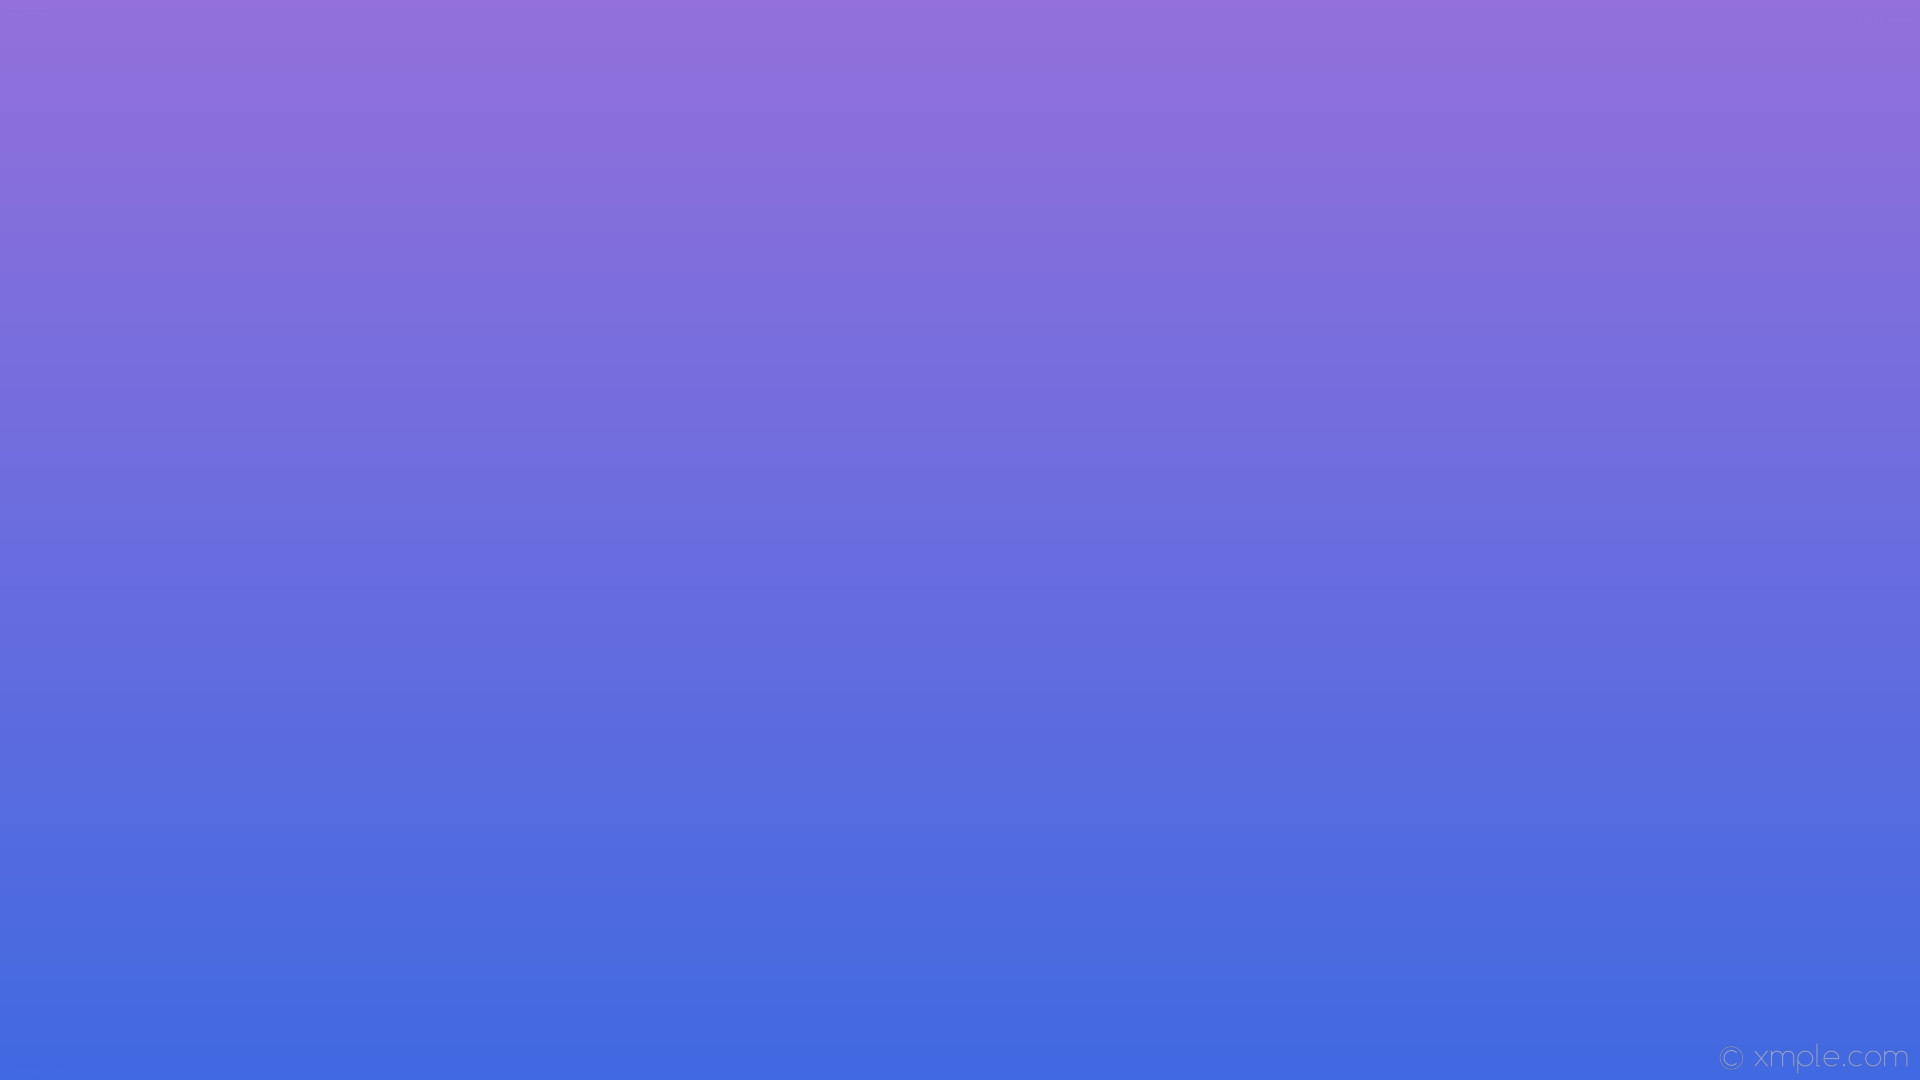 1920x1080 wallpaper linear purple gradient blue royal blue medium purple #4169e1  #9370db 270Â°